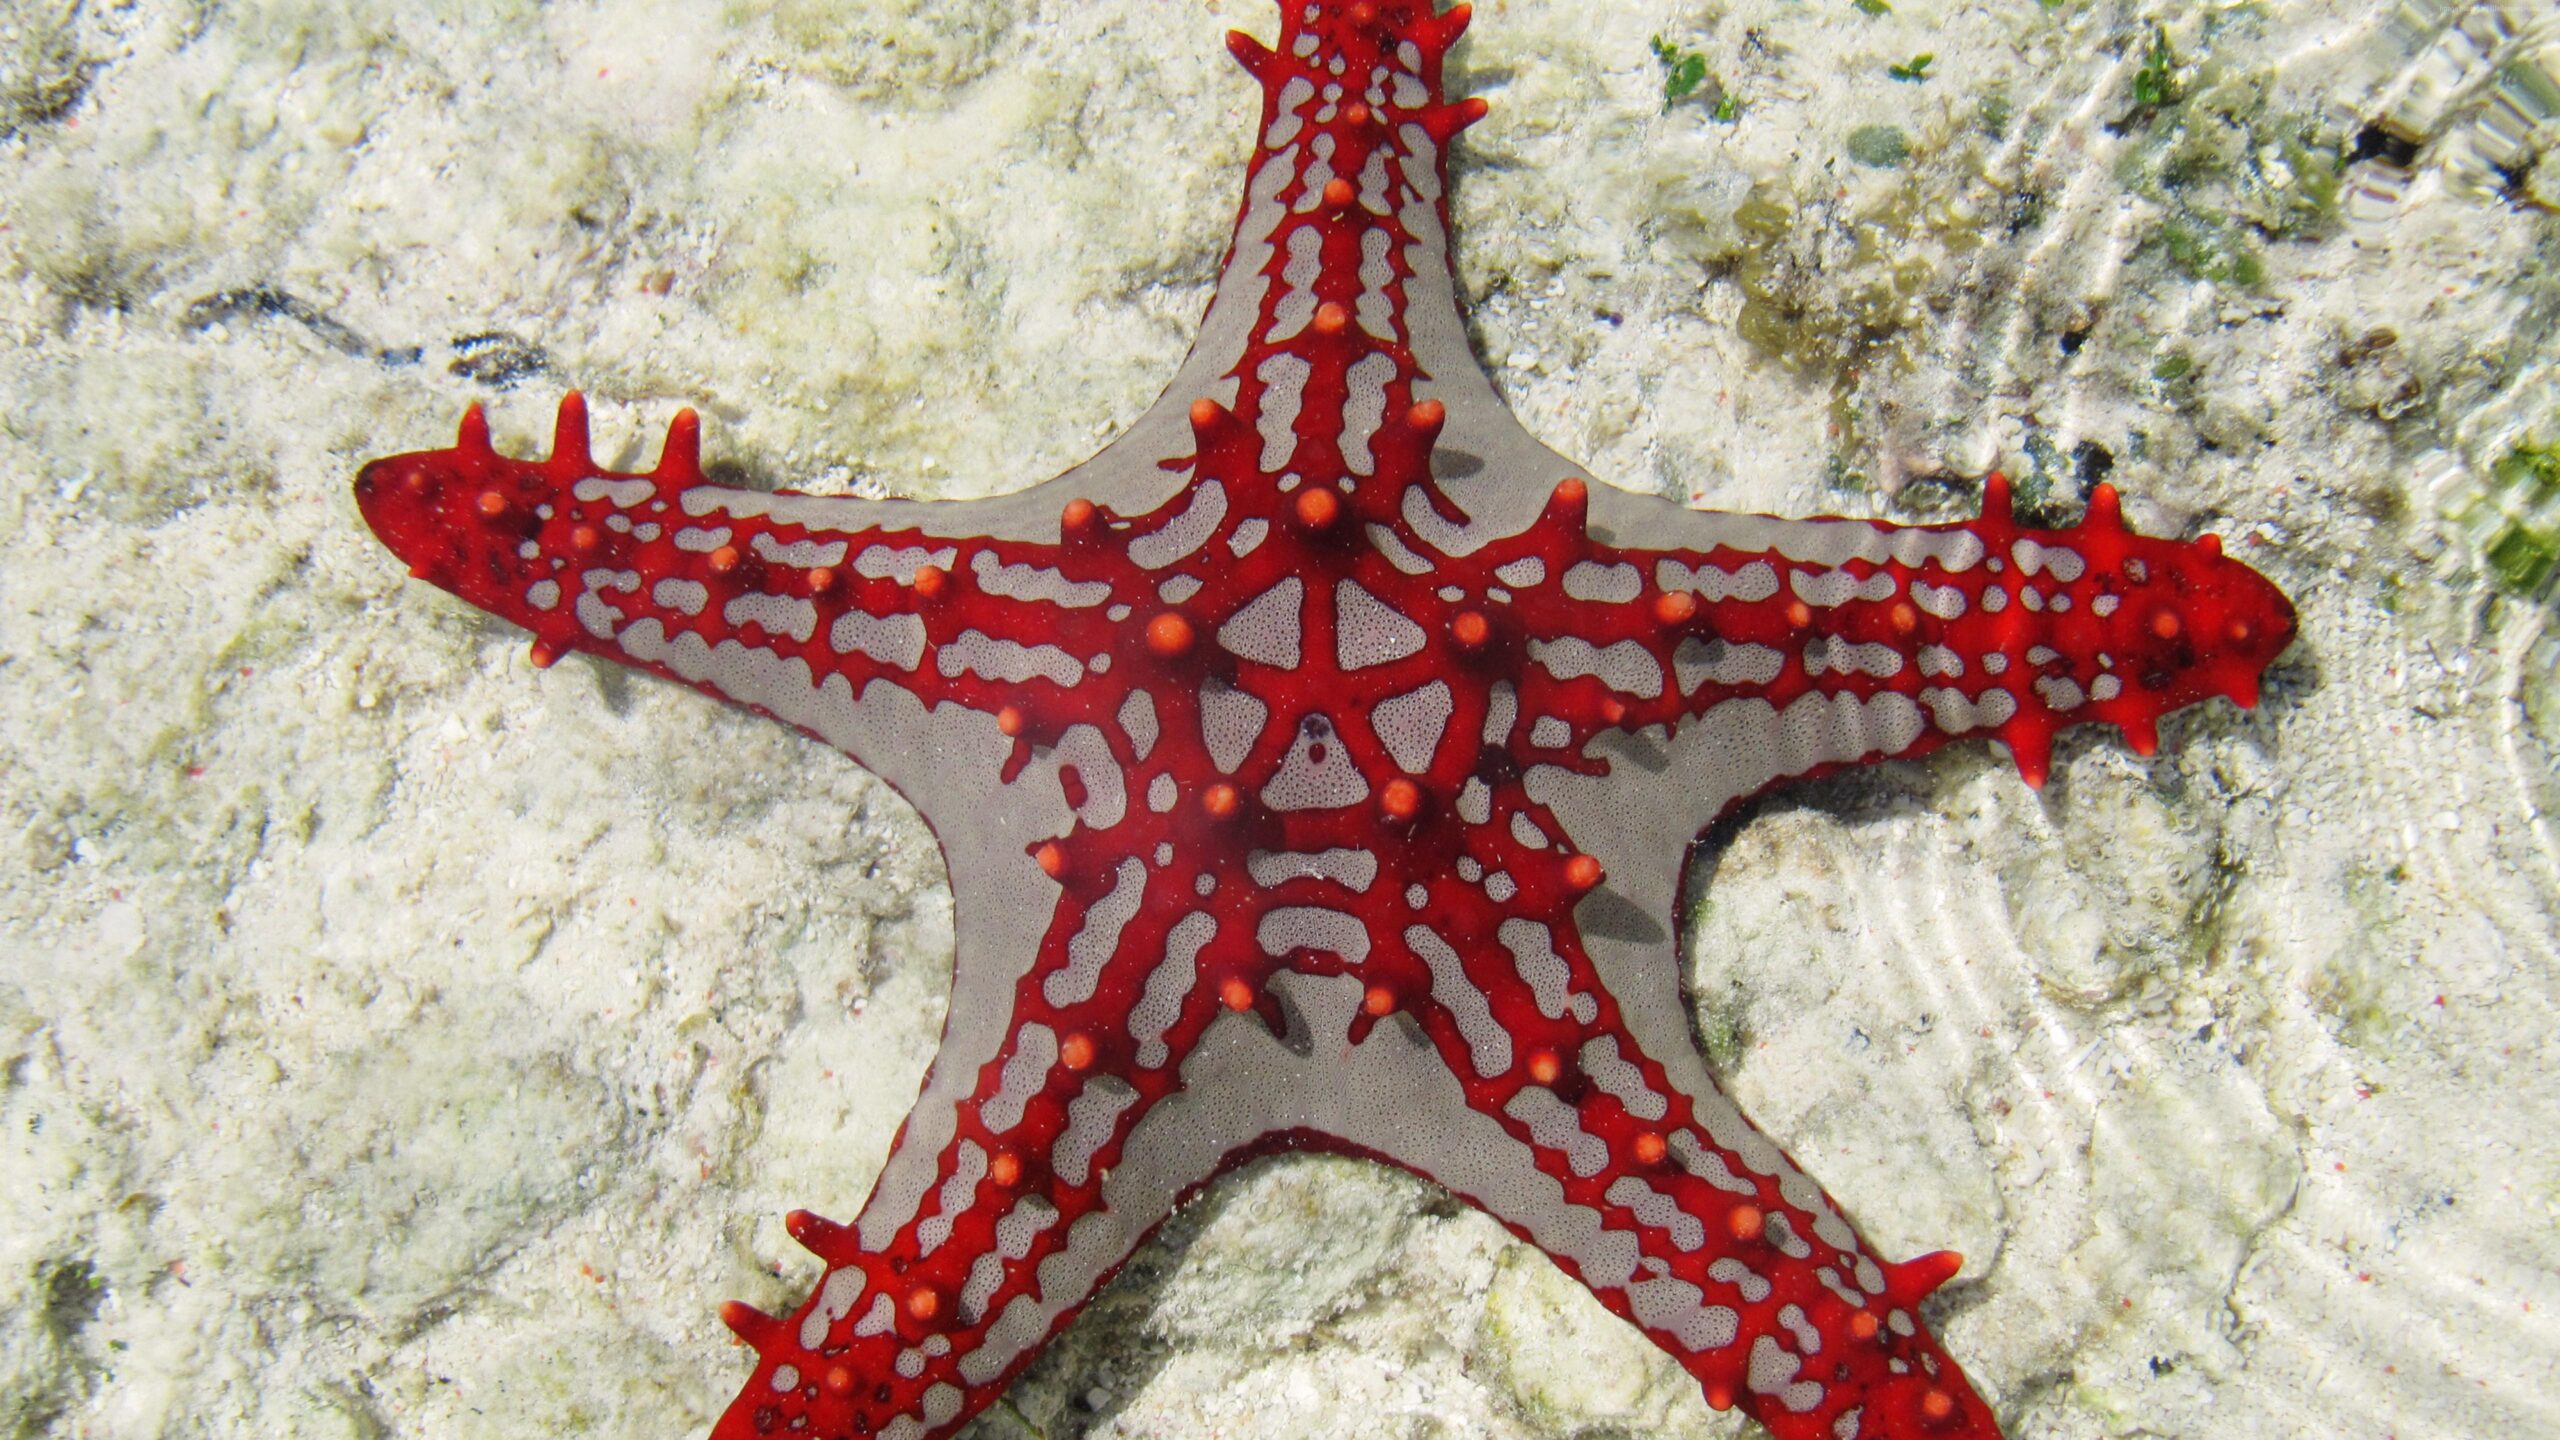 Sea Star Zanzibar Africa Diving Tourism Underwater Fish k Wallpapers